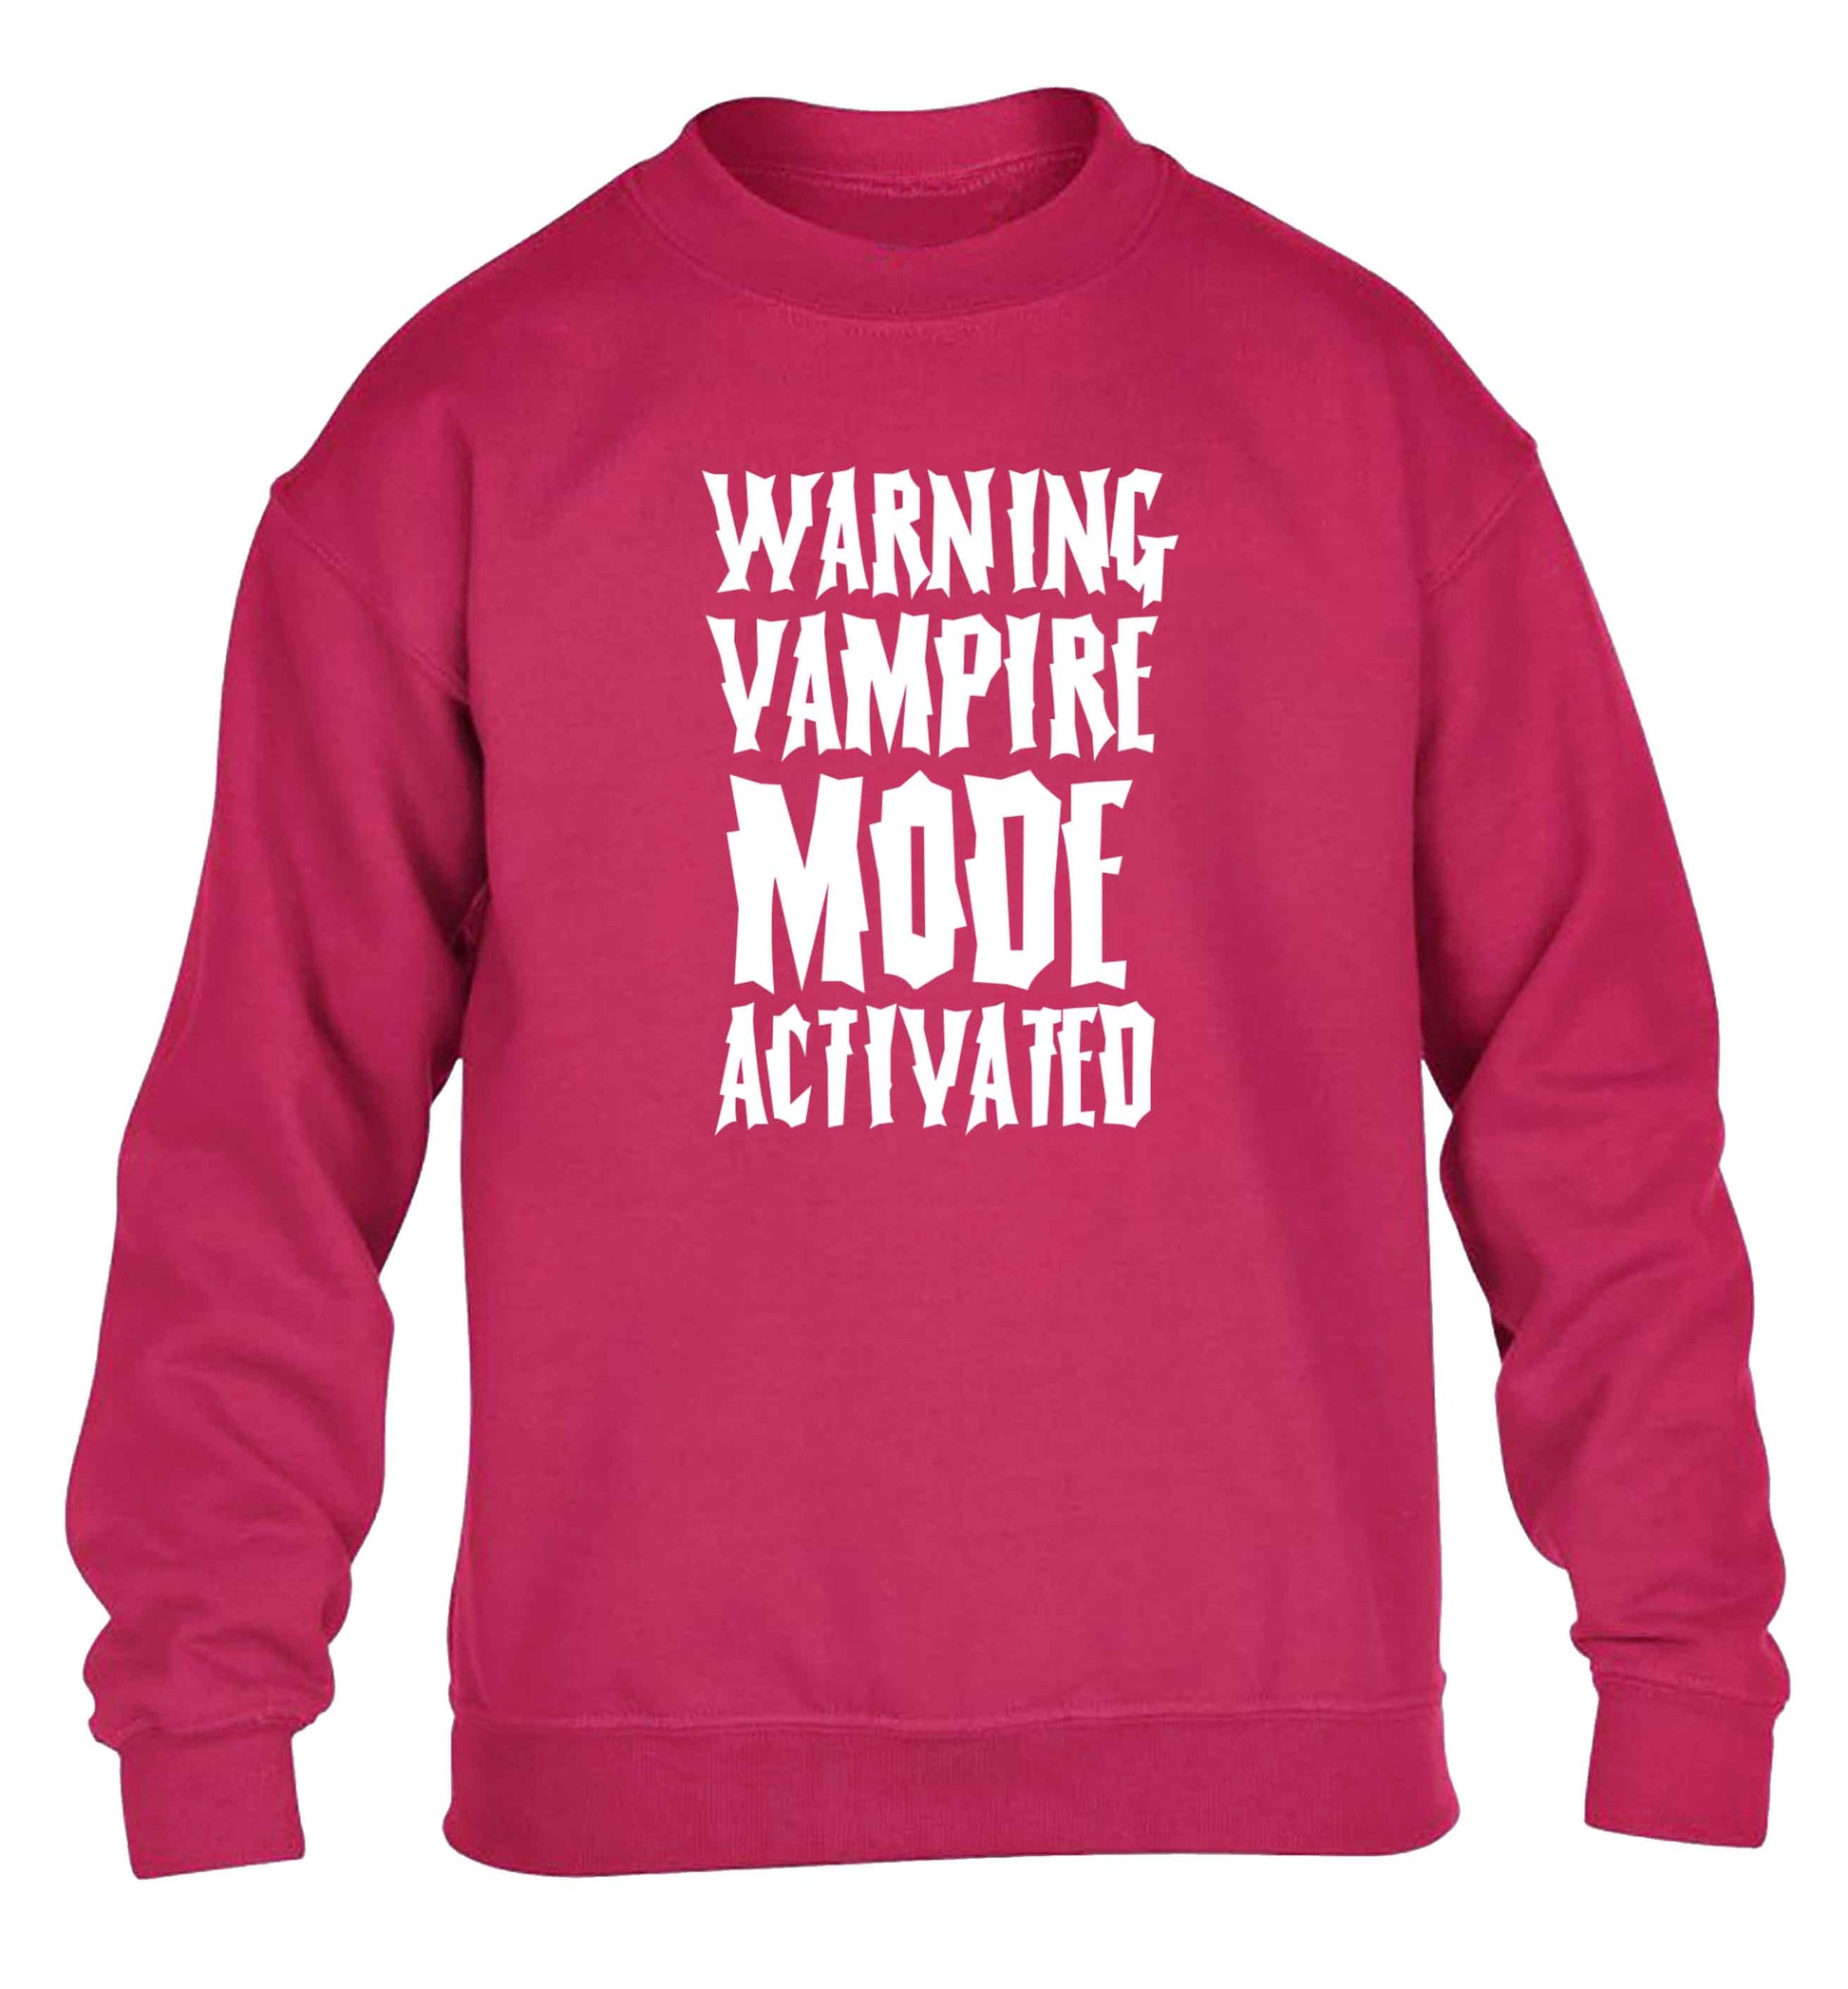 Warning vampire mode activated children's pink sweater 12-13 Years